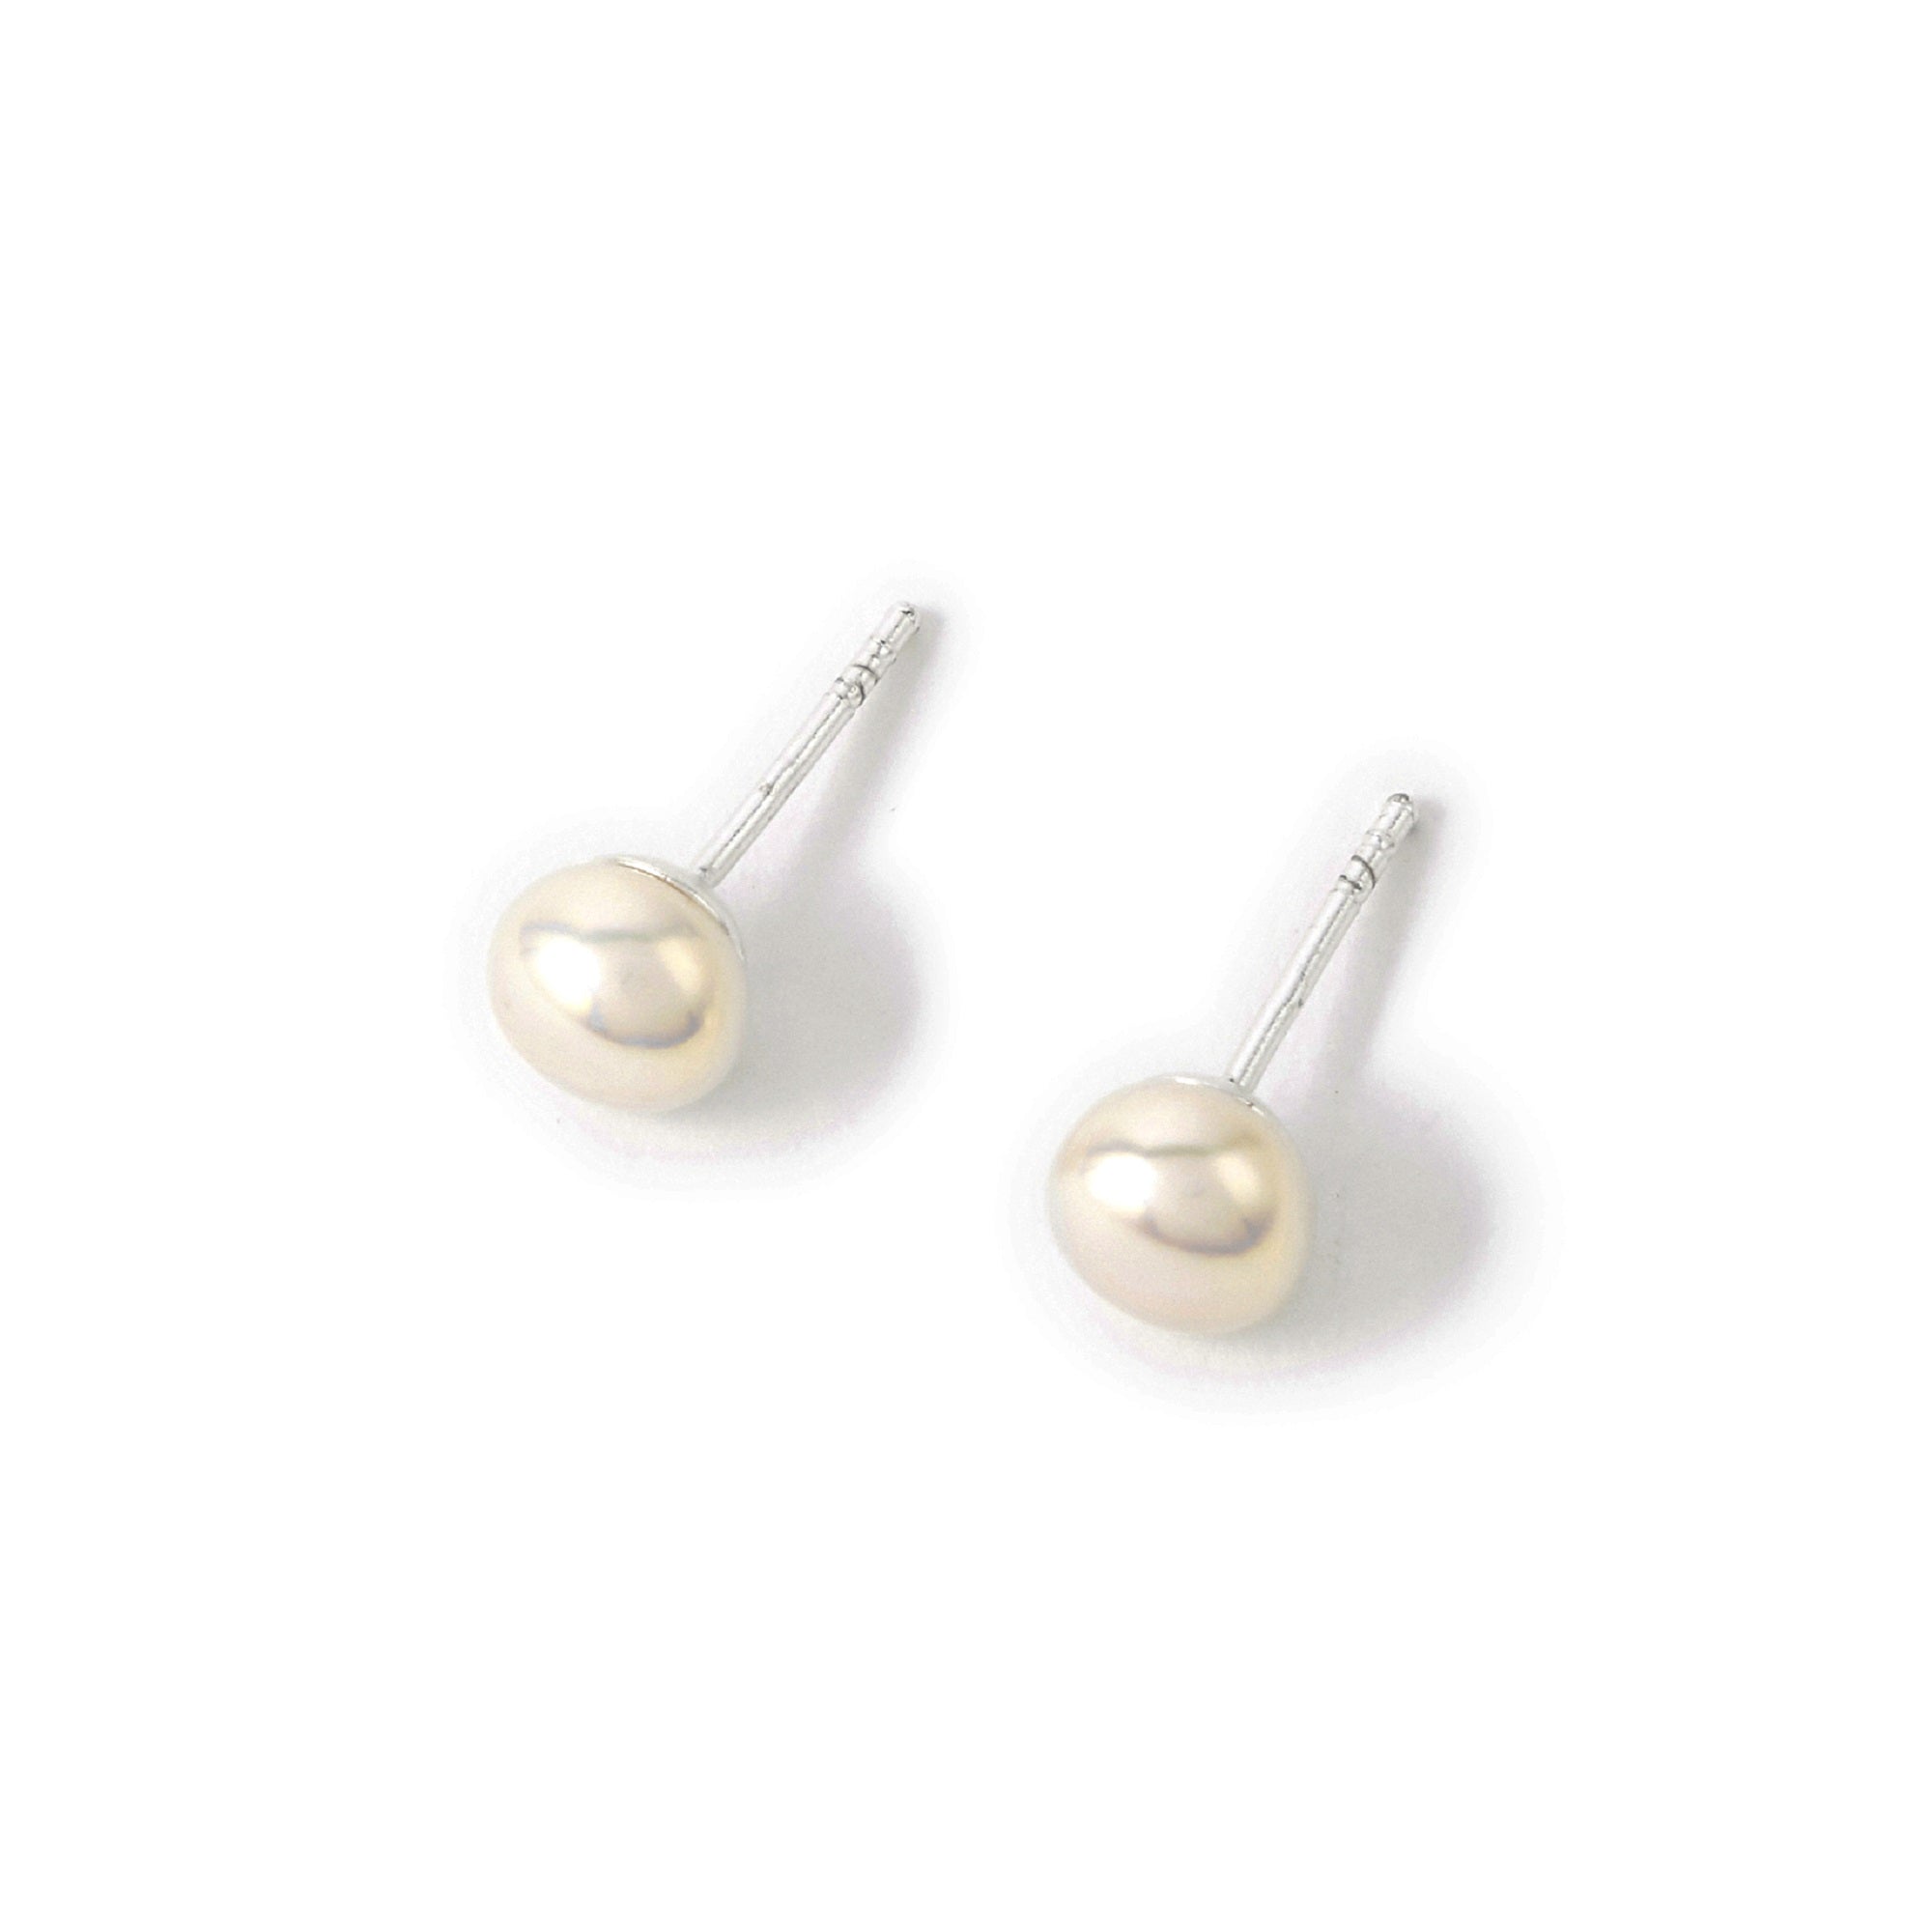 Accessorize London St Small Freshwater Pearl Stud Earrings